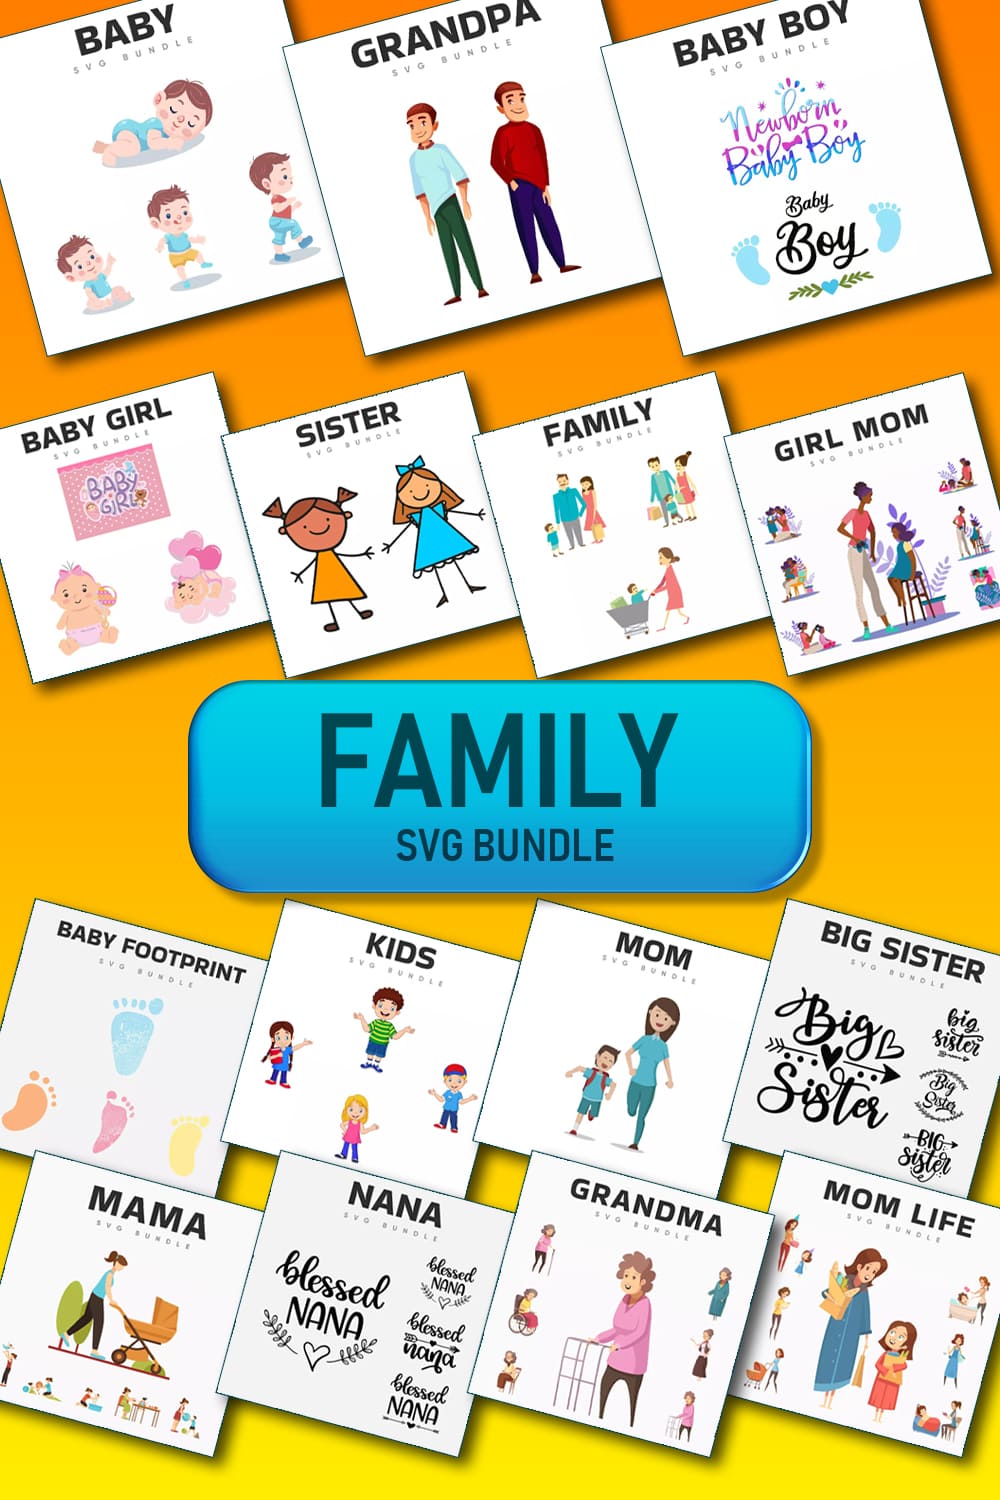 Family SVG Bundle Pinterest.